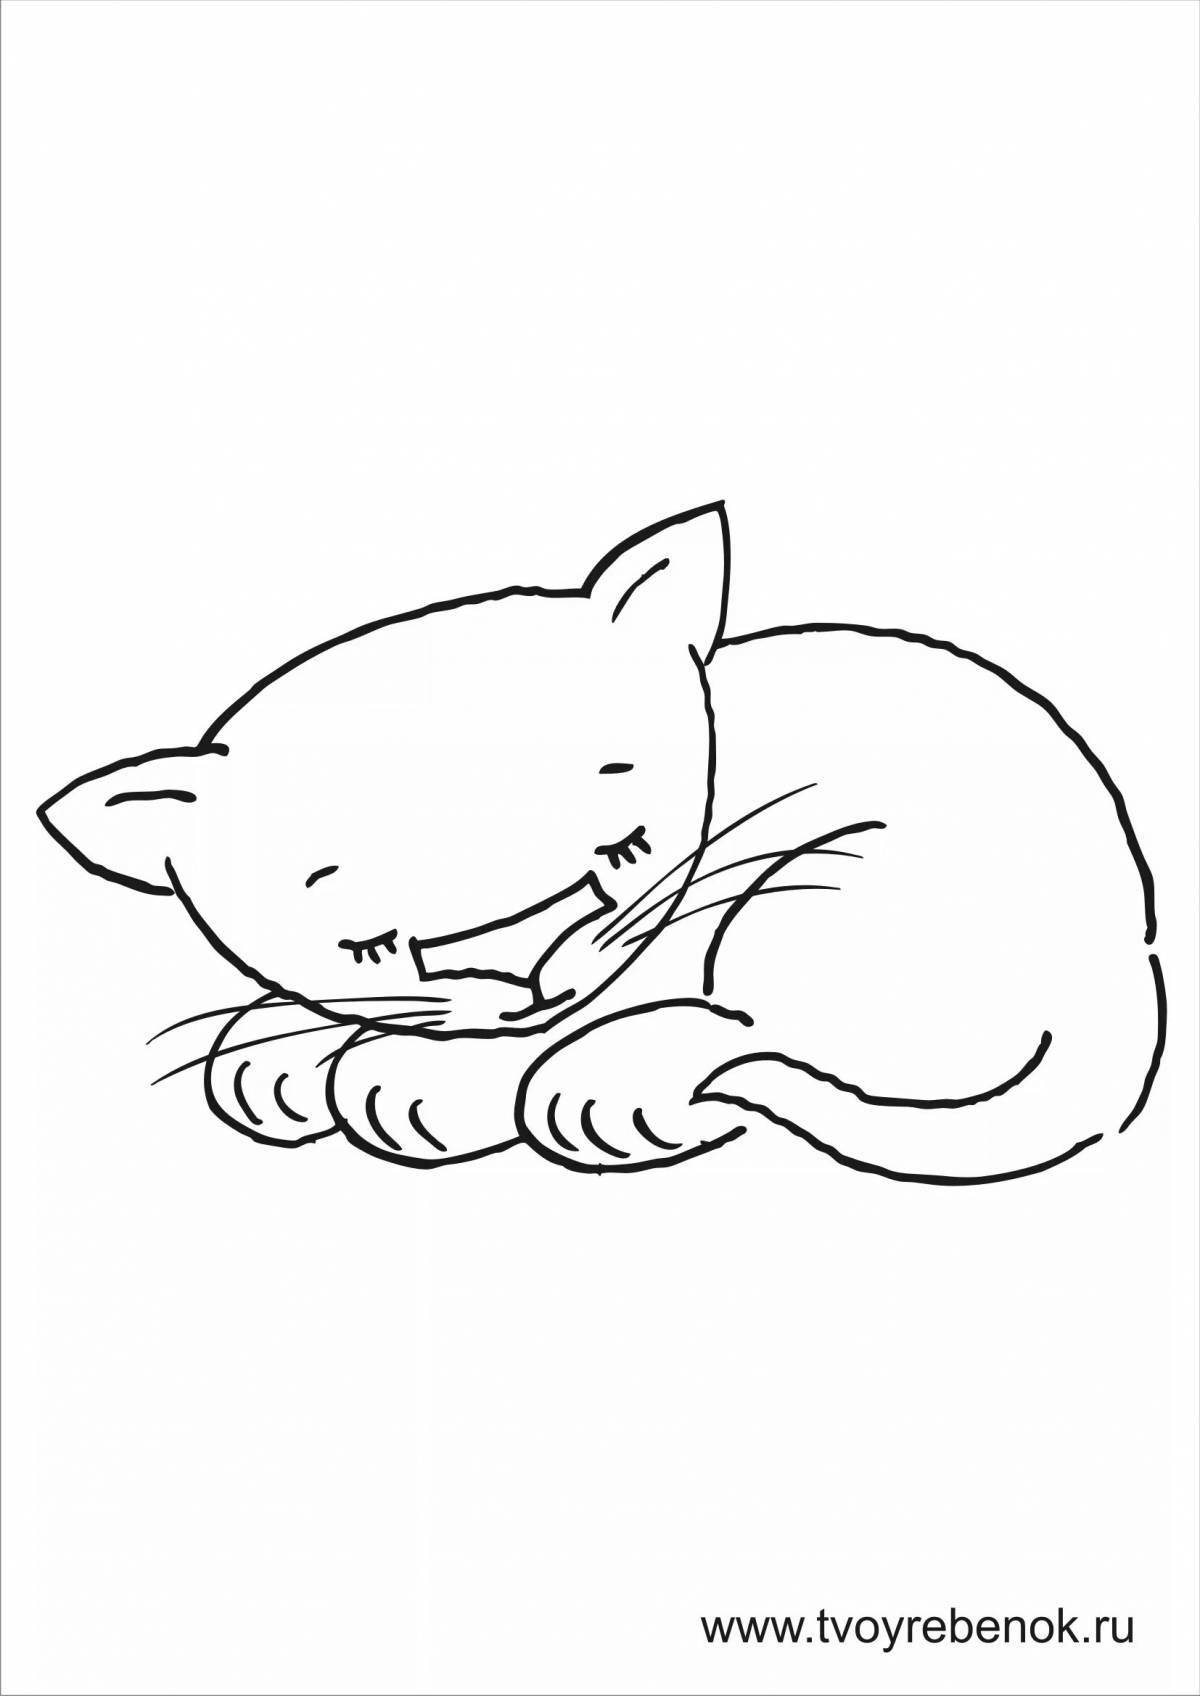 Dreamy sleeping cat coloring book